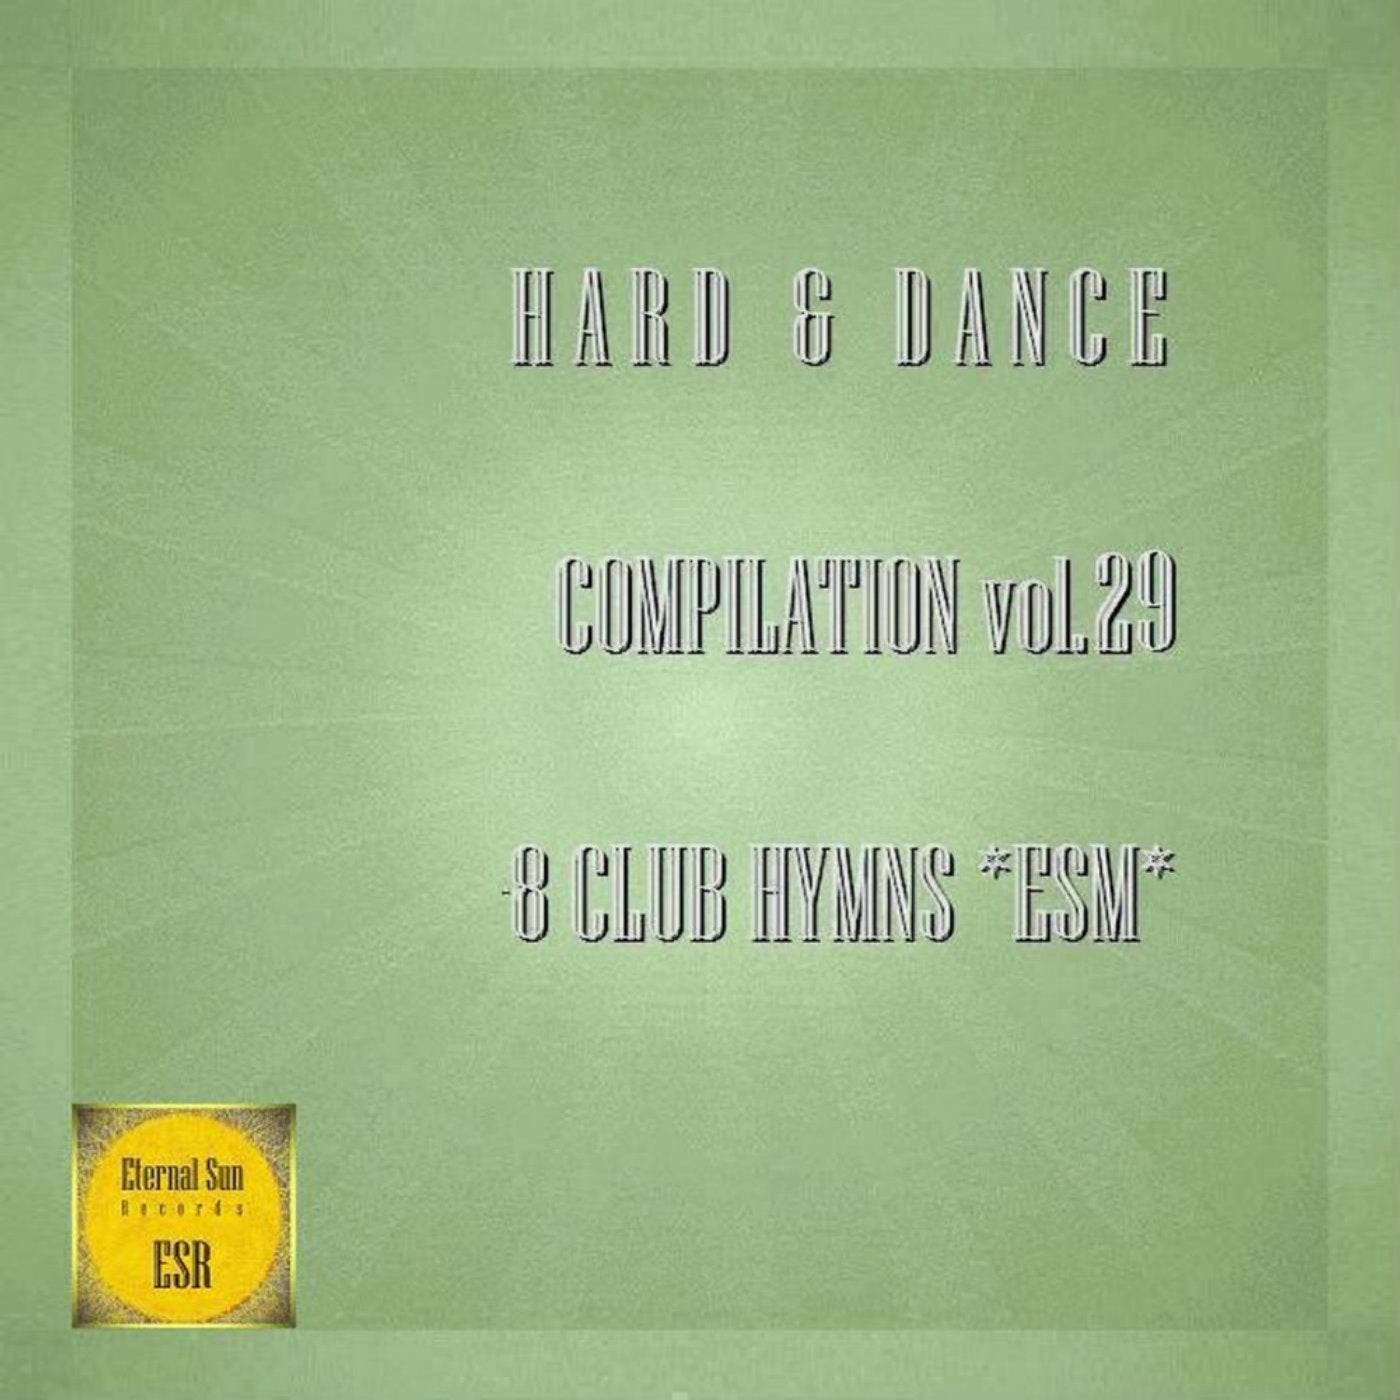 Hard & Dance Compilation, Vol. 29: 8 Club Hymns ESM